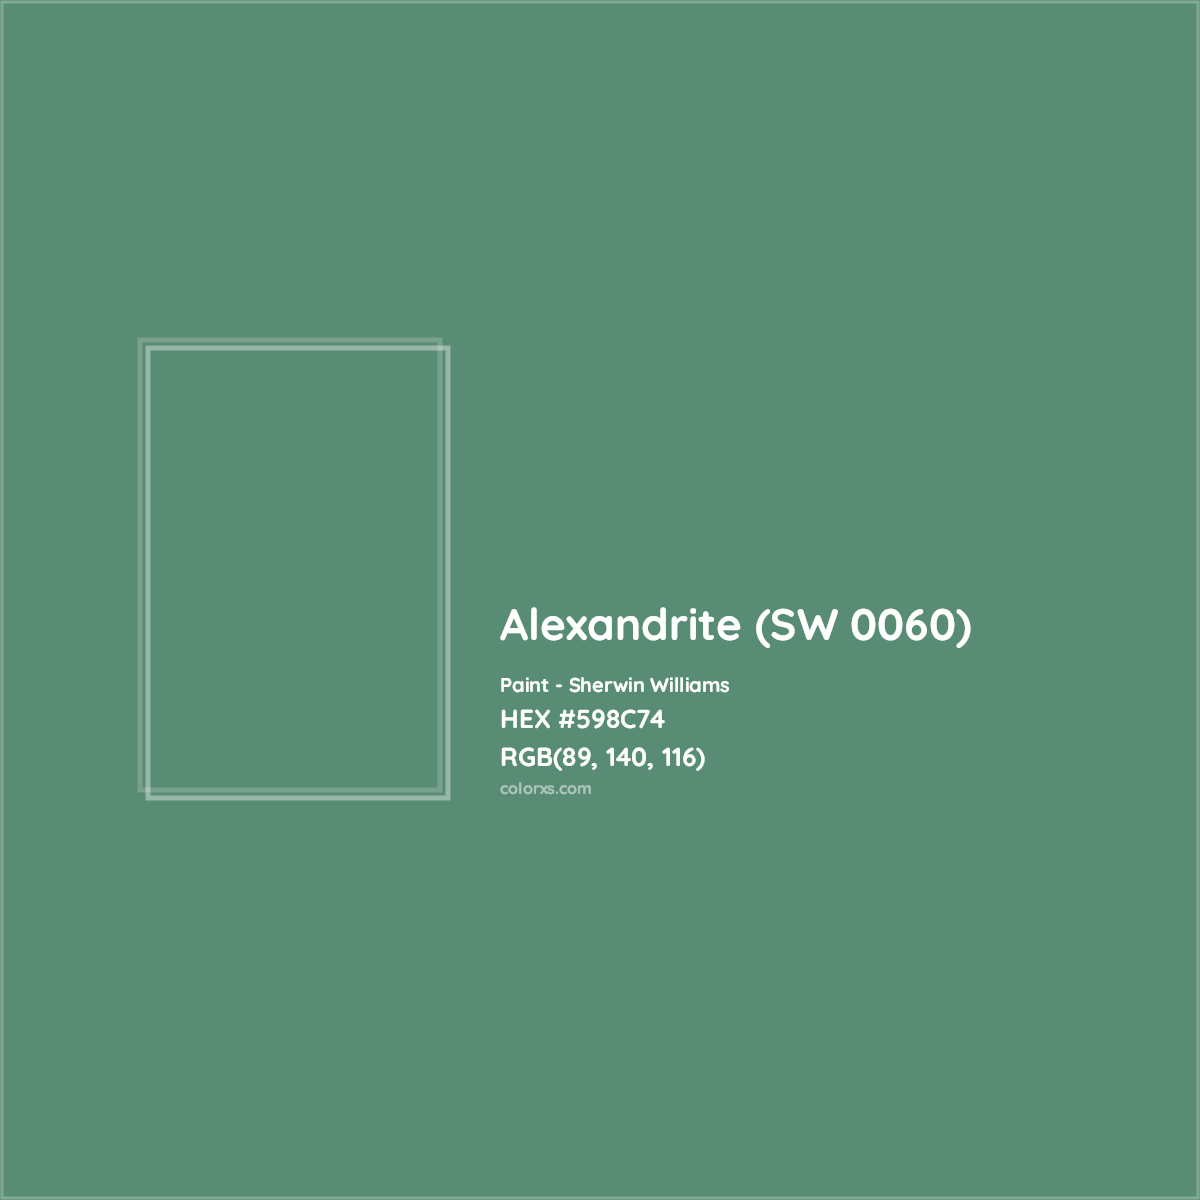 HEX #598C74 Alexandrite (SW 0060) Paint Sherwin Williams - Color Code